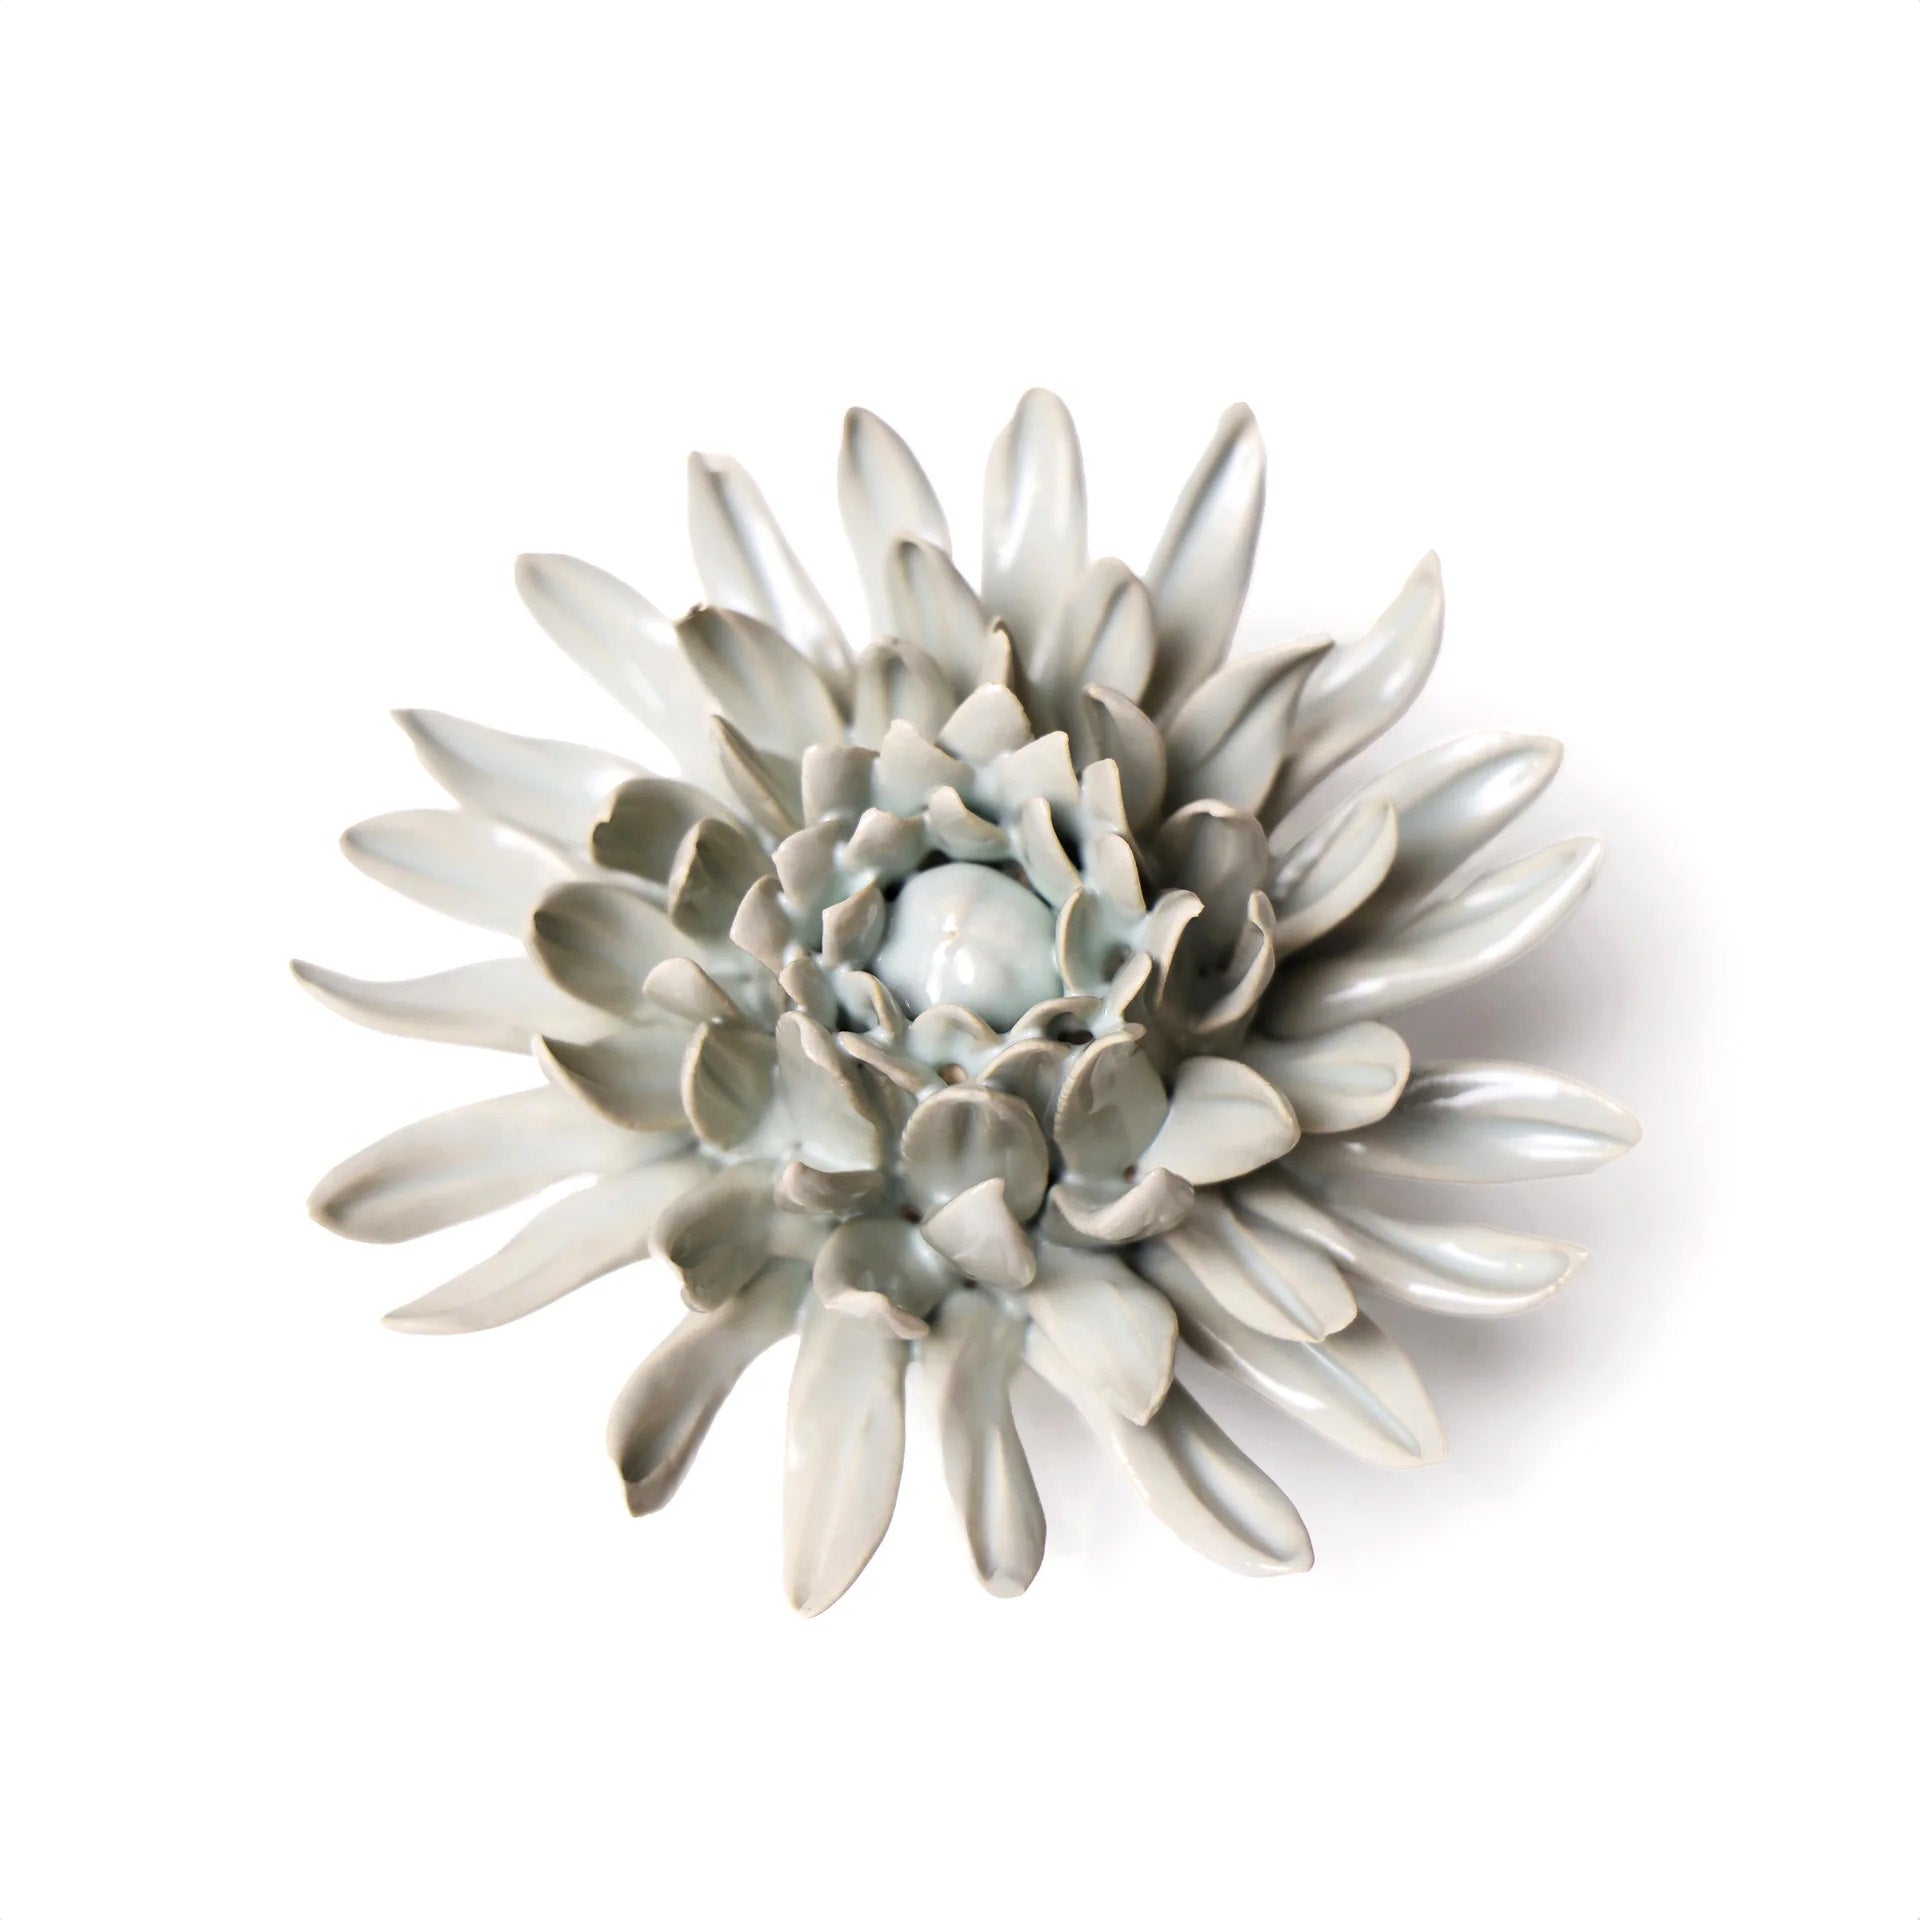 Ceramic Wallflowers - Chrysler Museum Shop